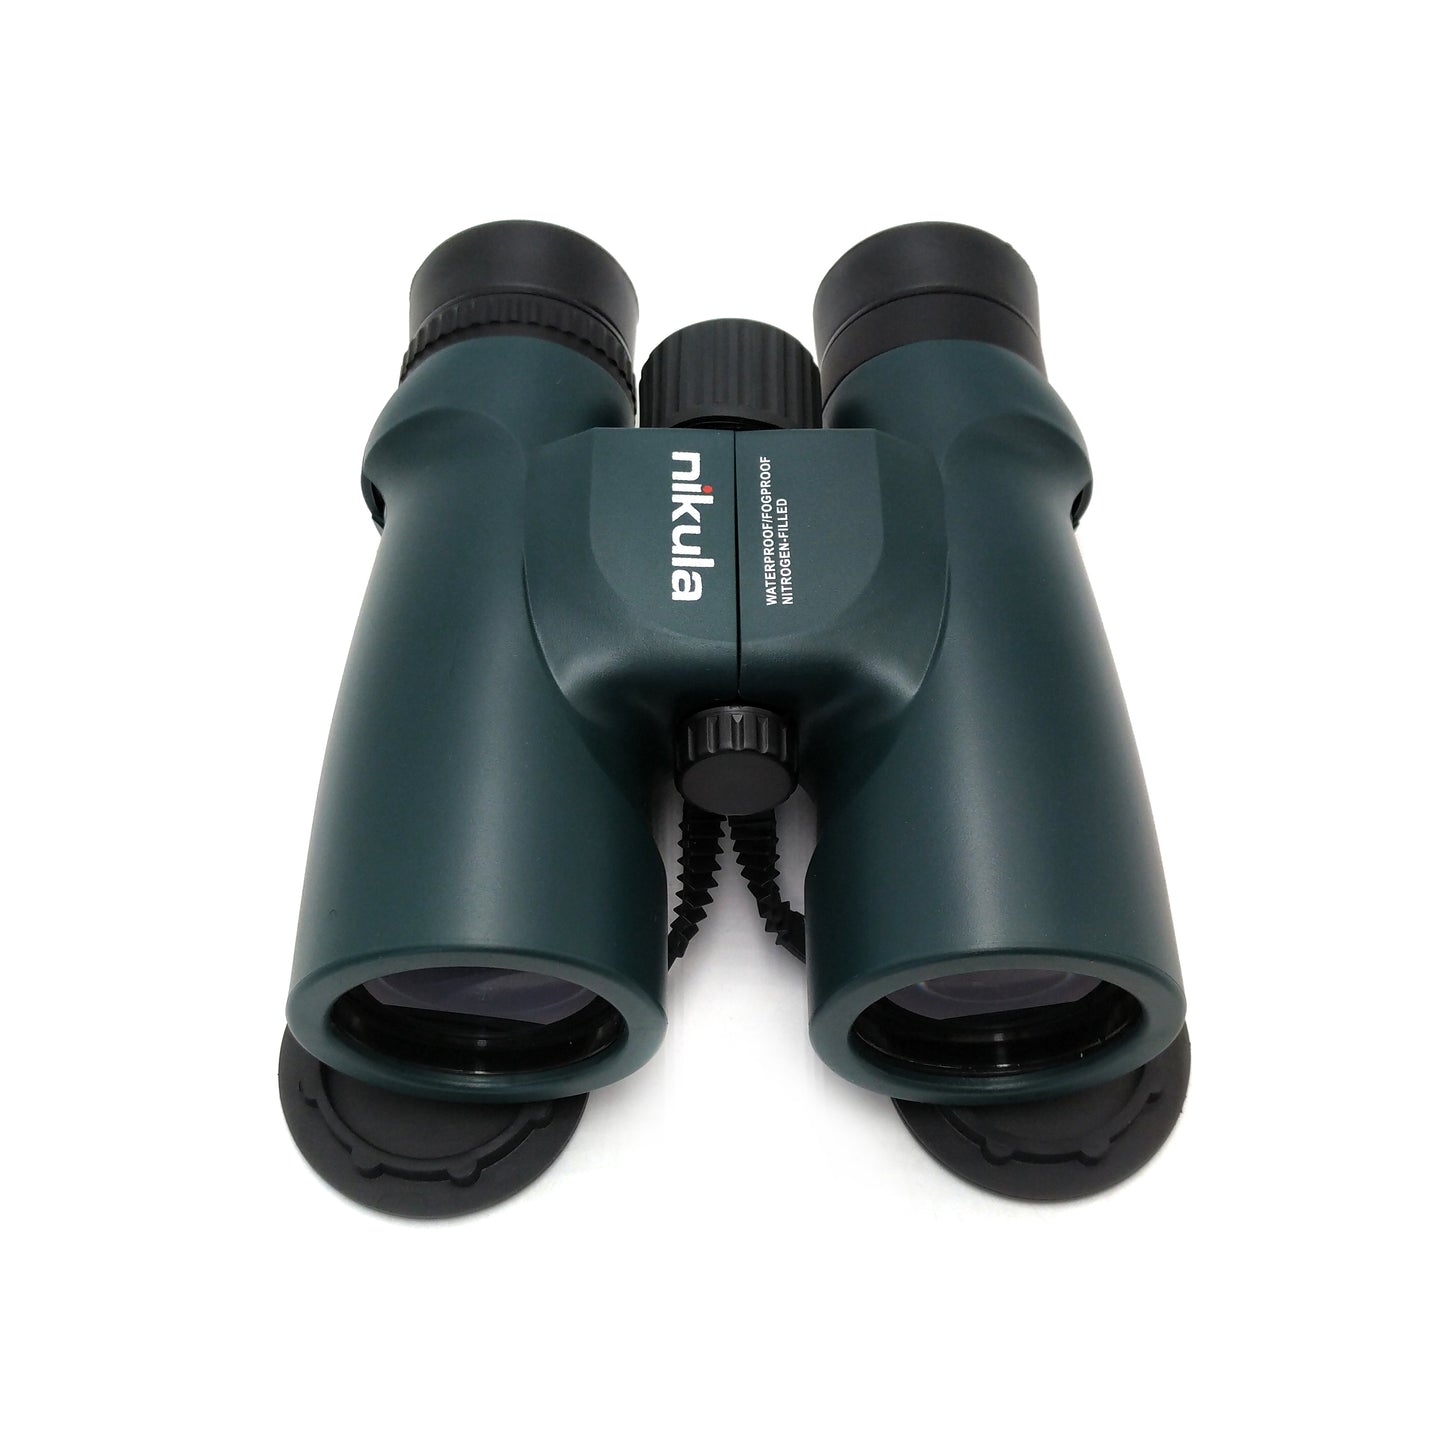 10X42 Roof Binocular Famous Brand Binoculars Bak4 FMC Telescope for Camping Hunting Viewing